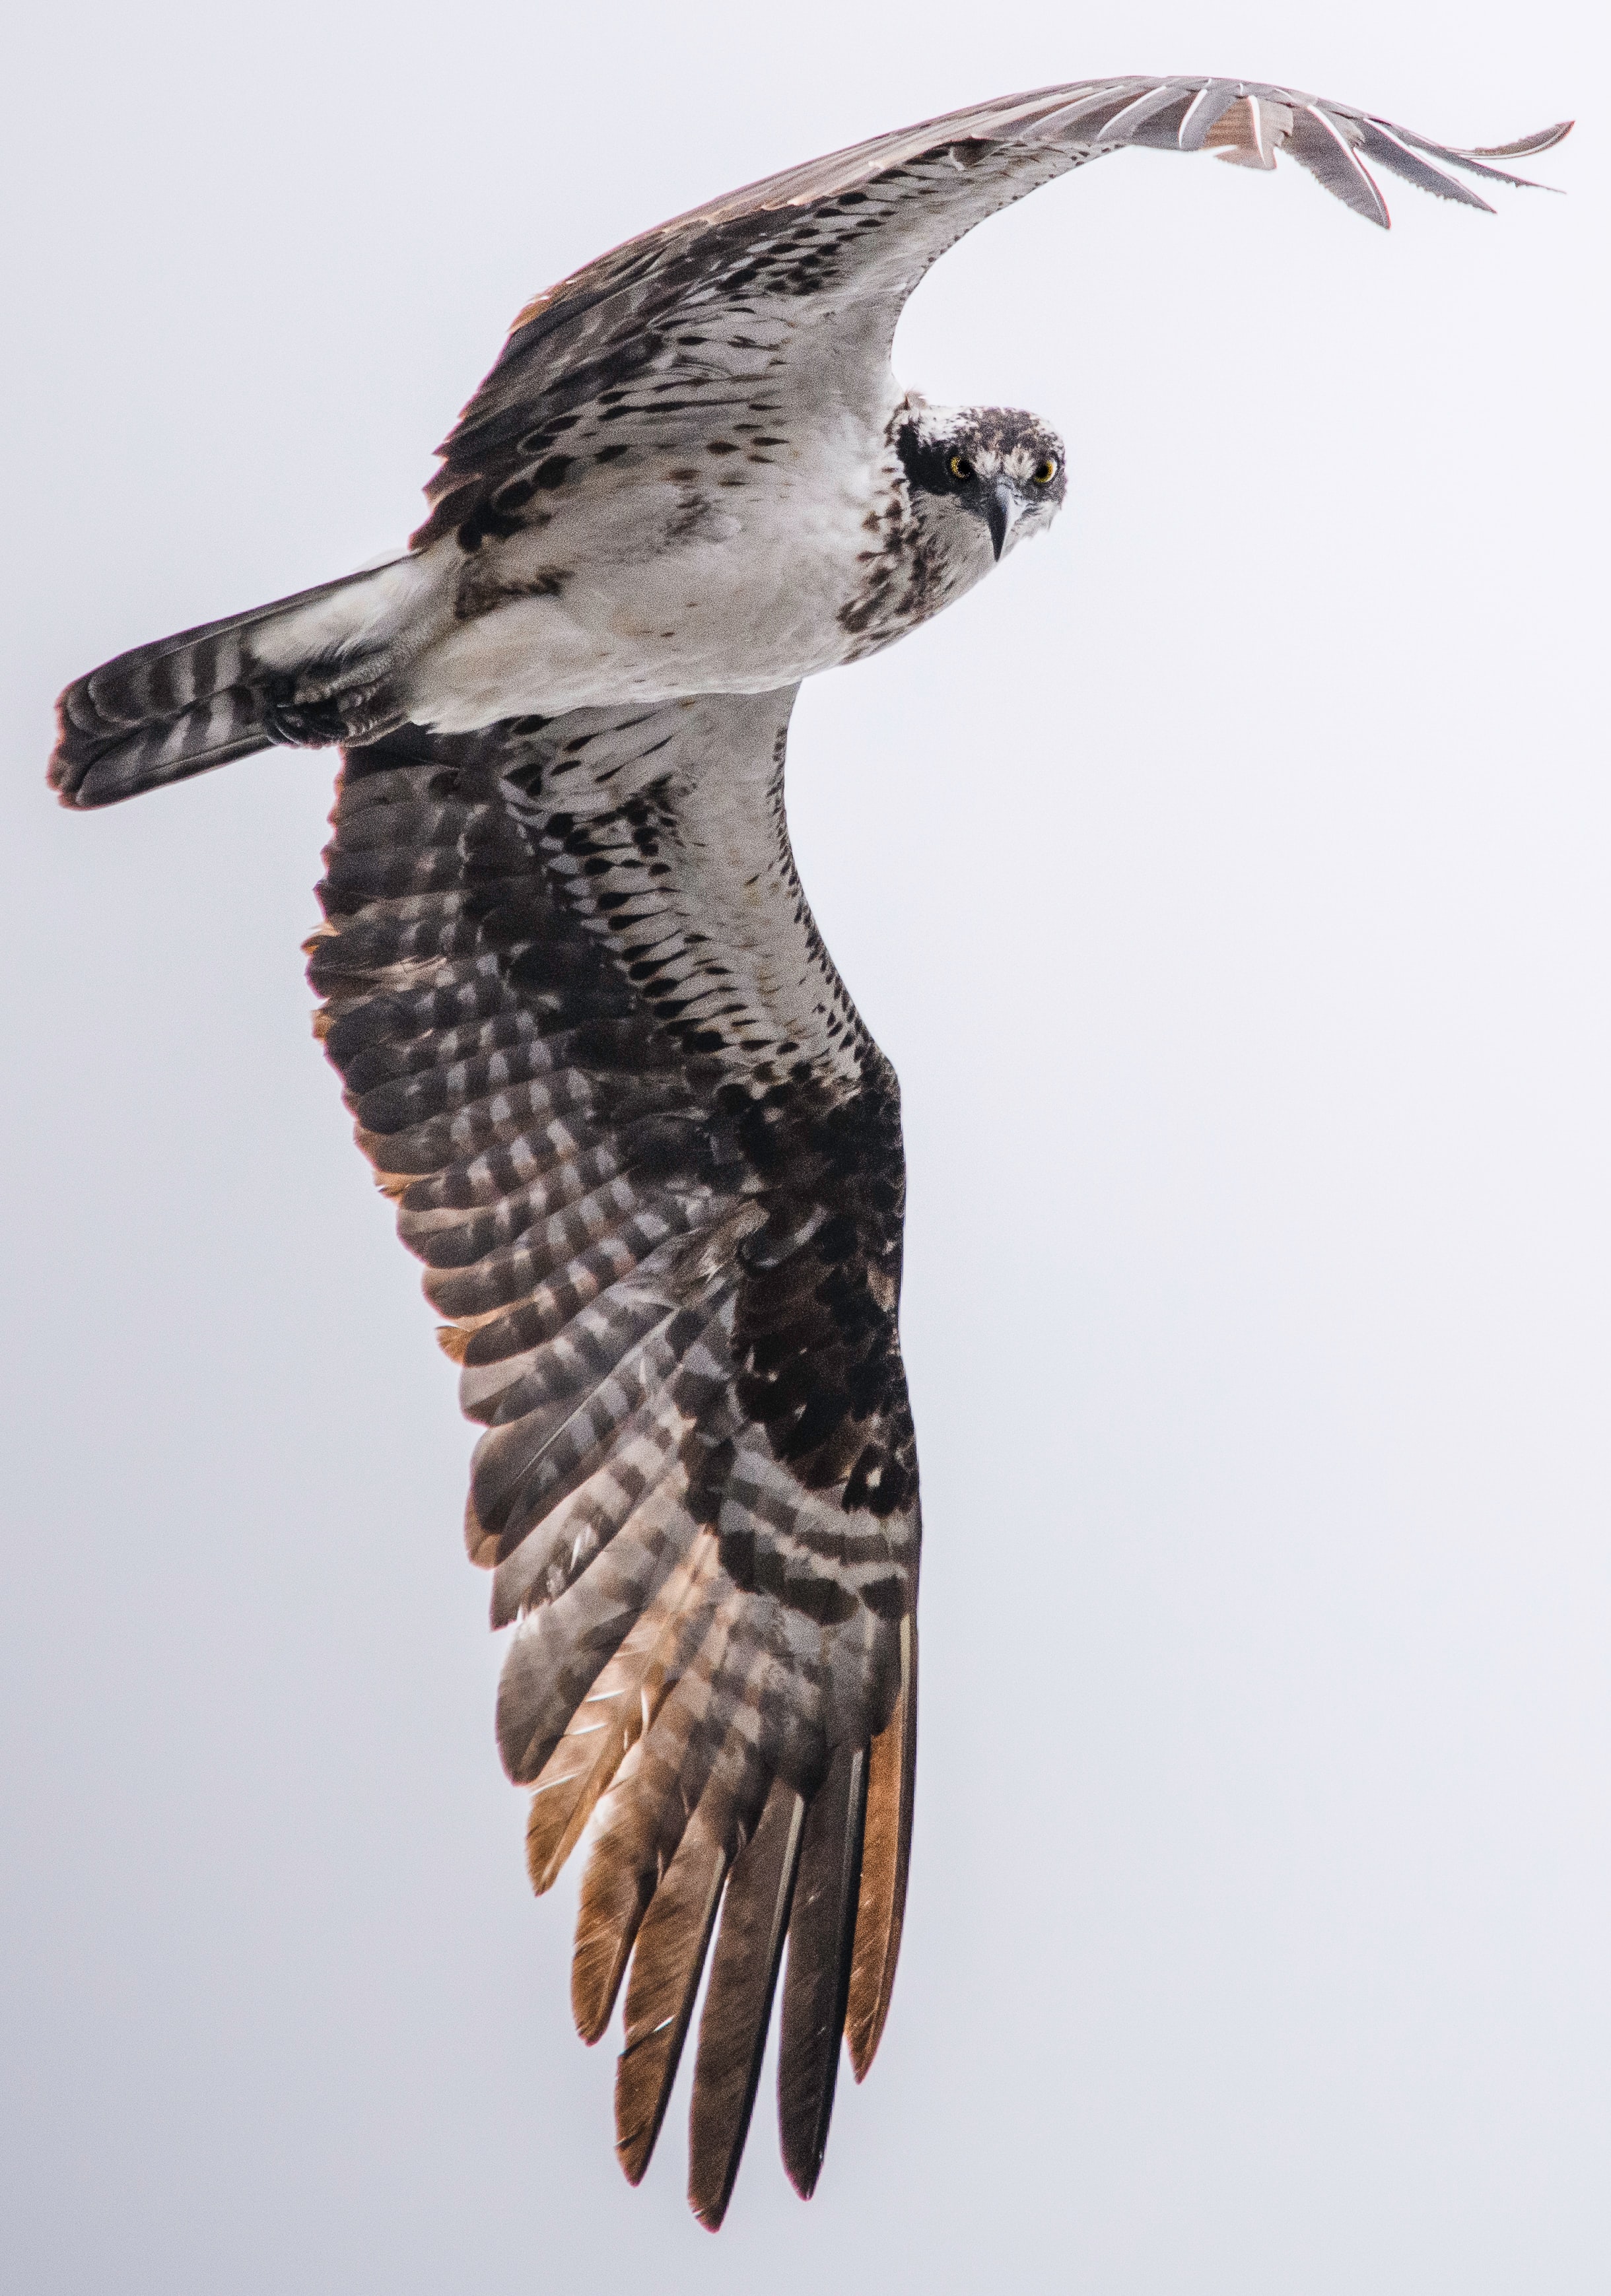 Bird in flight eyeing photographer; image by Jeremy Hynes, via Unsplash.com.